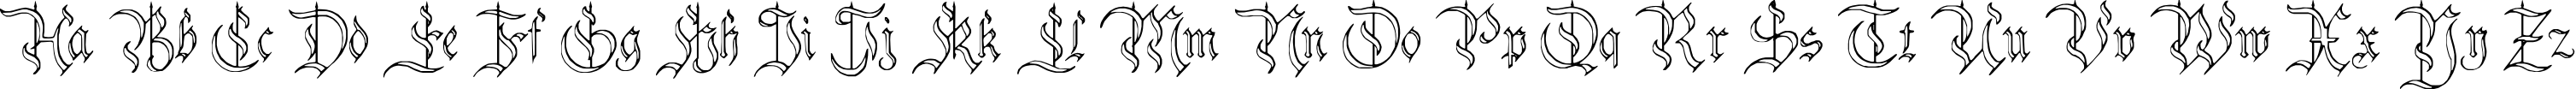 Пример написания английского алфавита шрифтом Charterwell No4